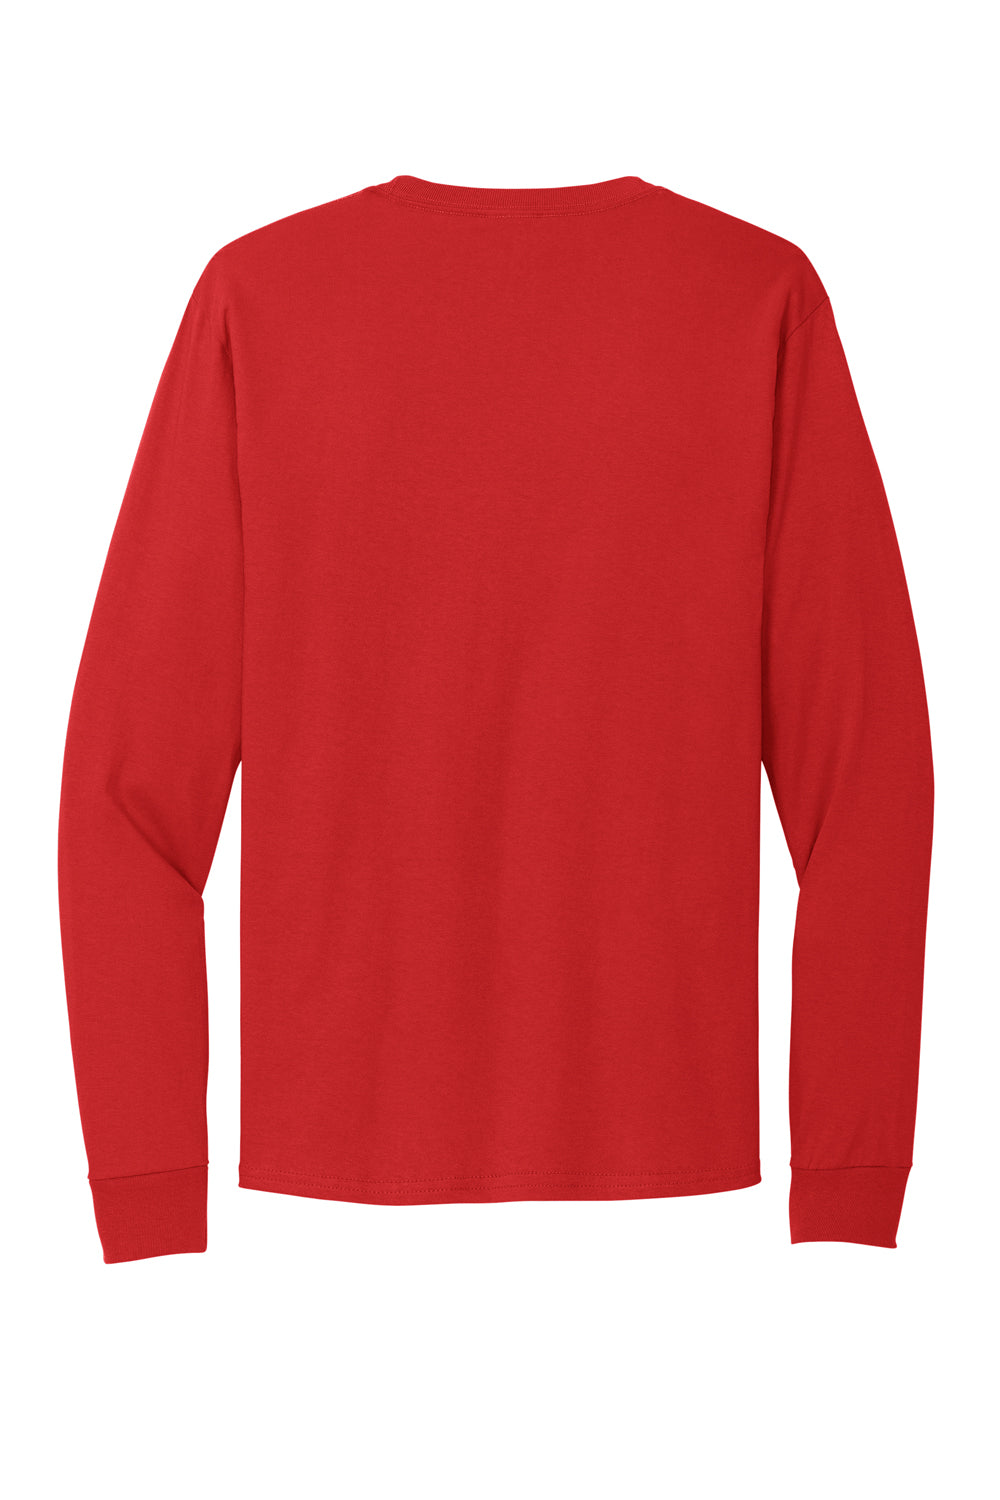 Hanes 5286 Mens ComfortSoft Long Sleeve Crewneck T-Shirt Athletic Red Flat Back